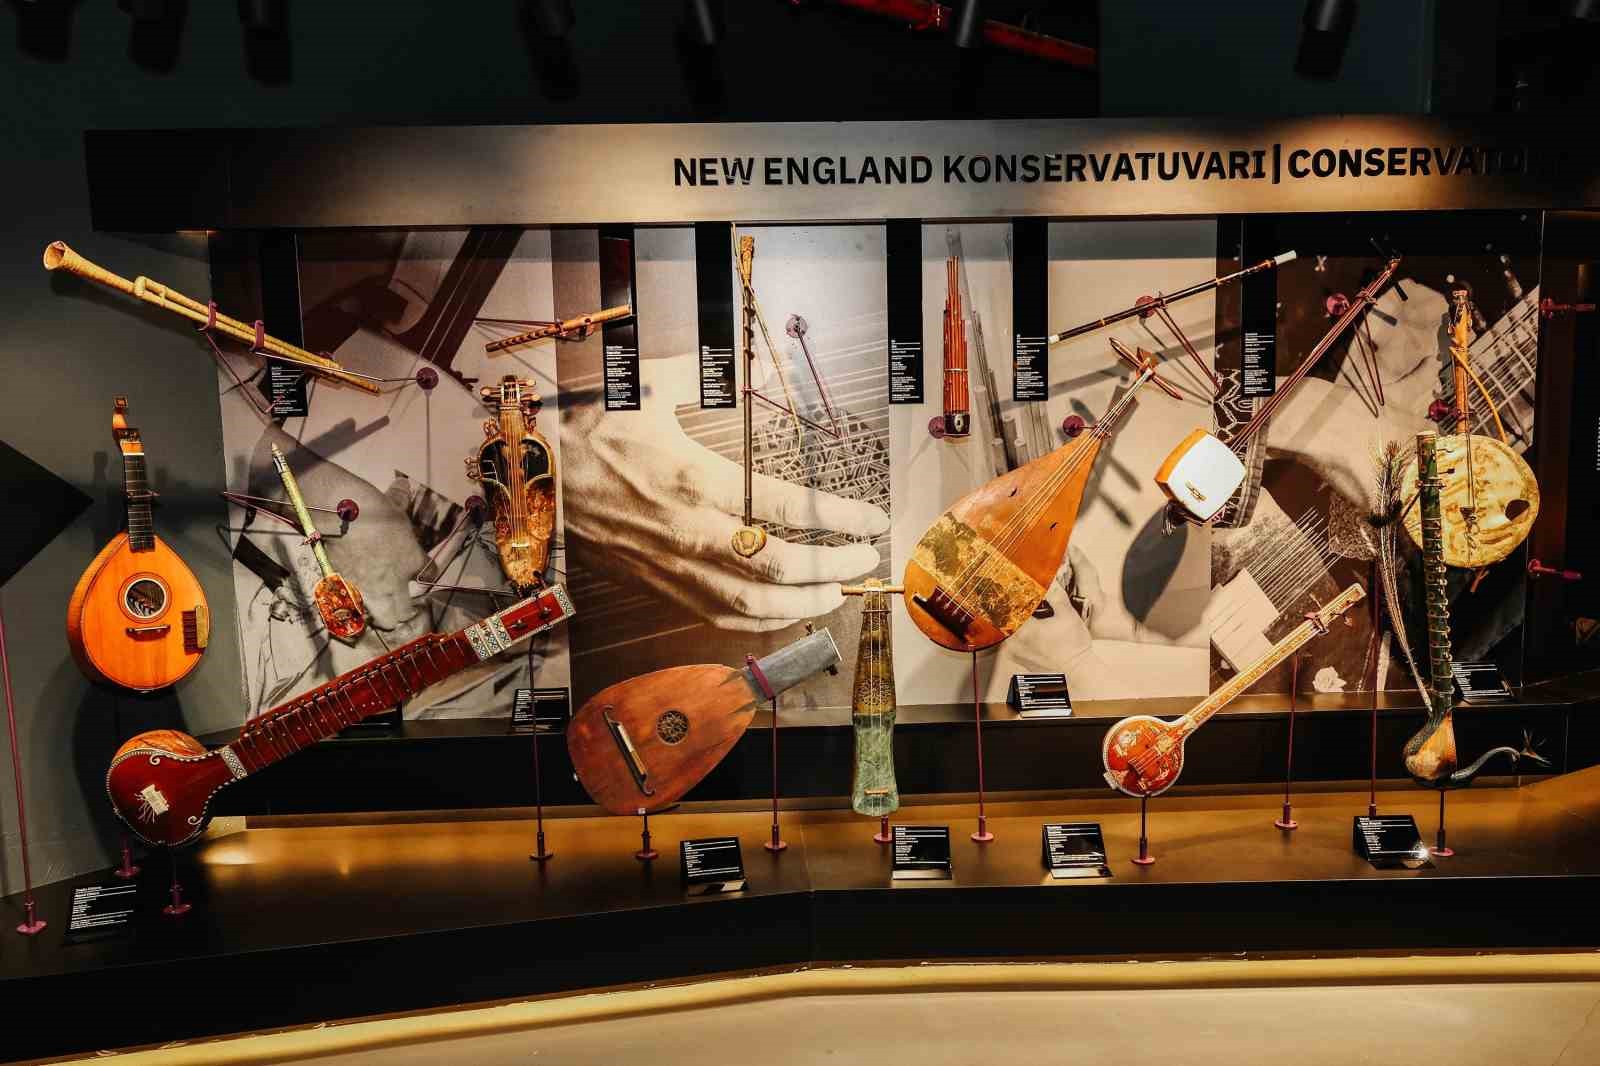 new england konservatuvari enstrumanlari muzede sergileniyor 2 UvAX8LrR